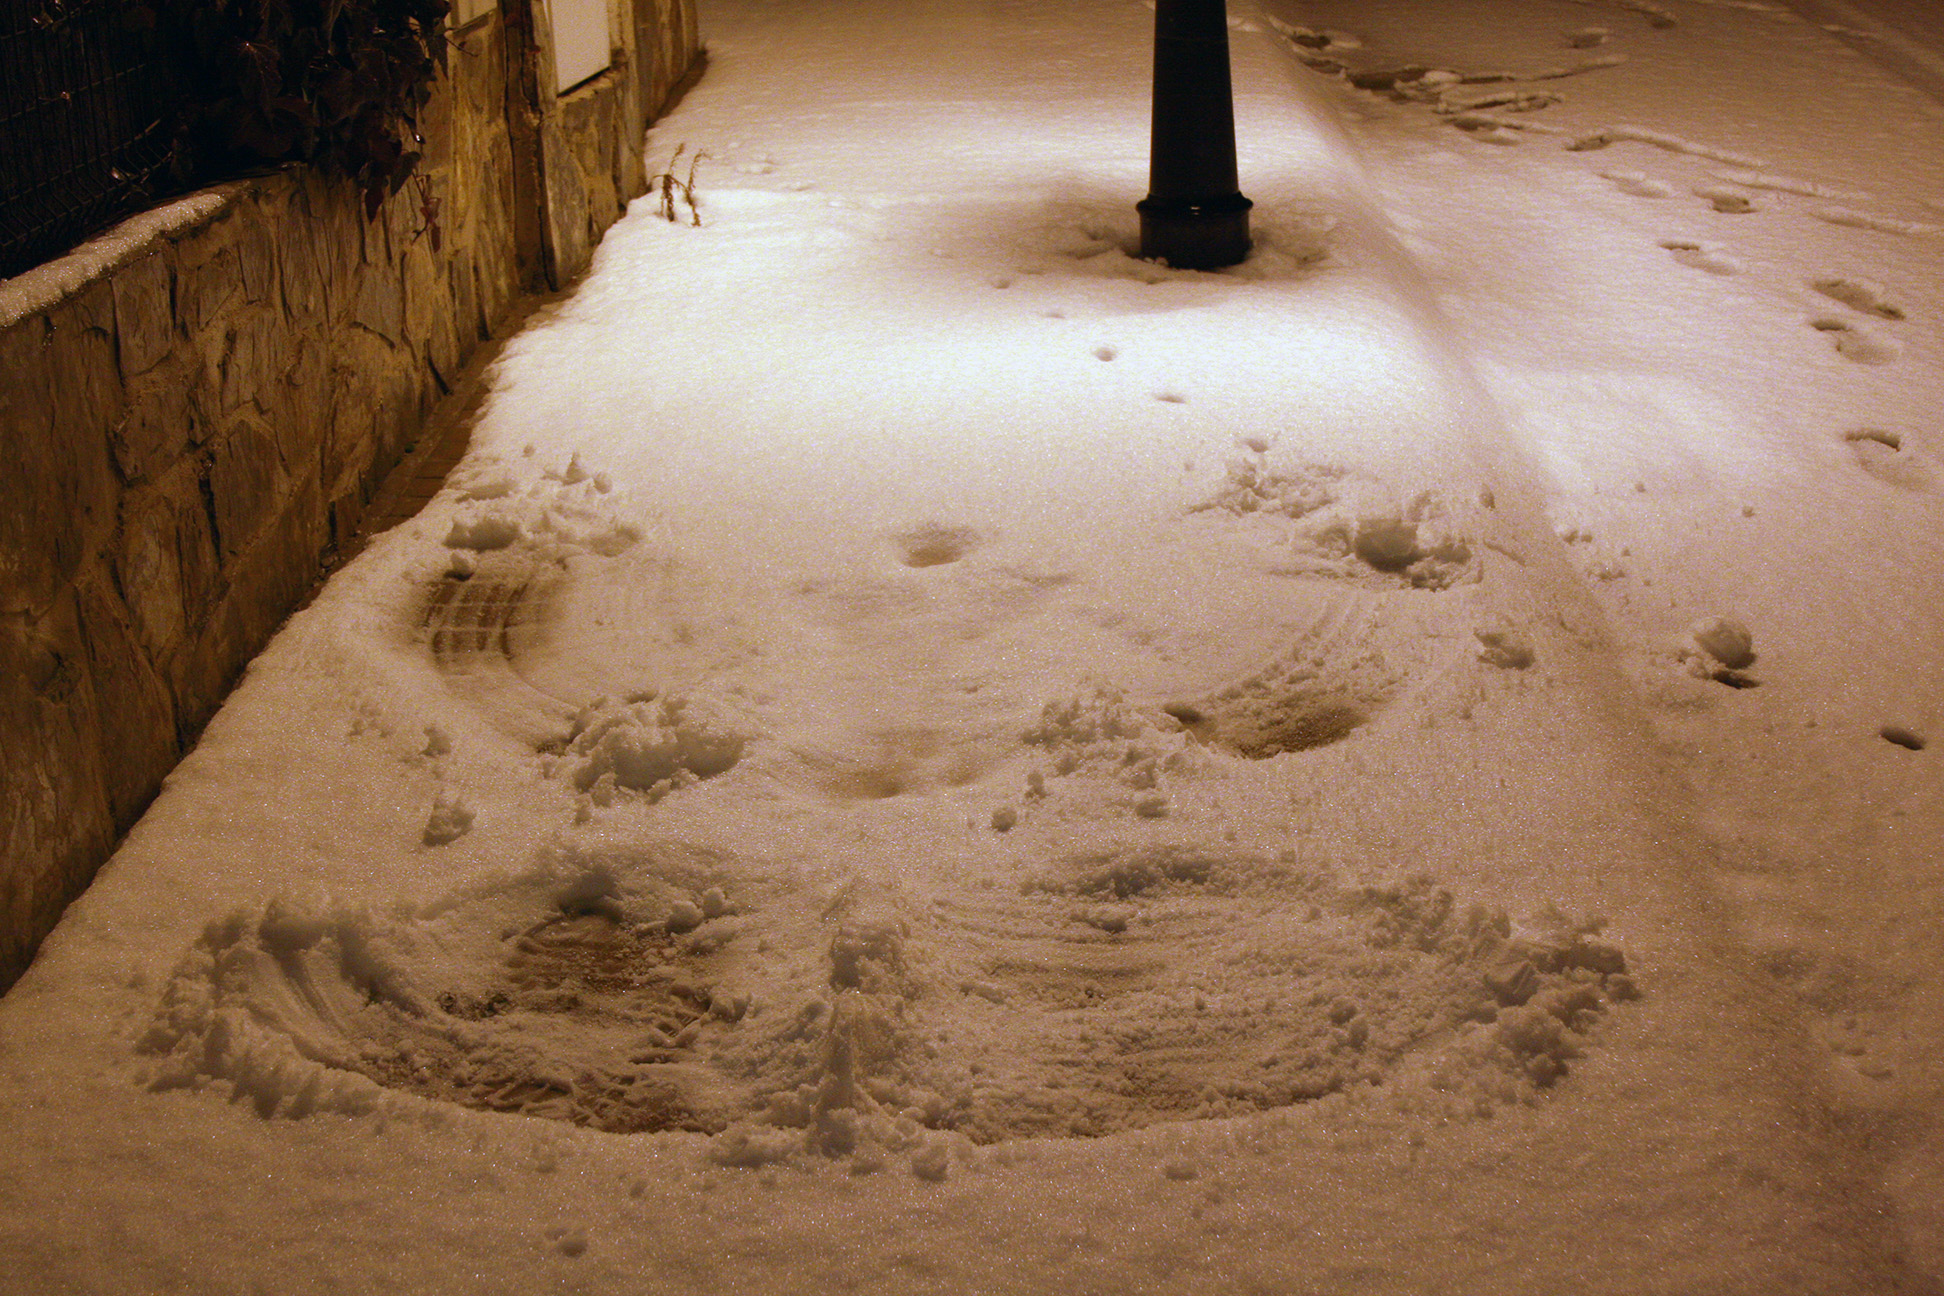 Snow angel on the pavement